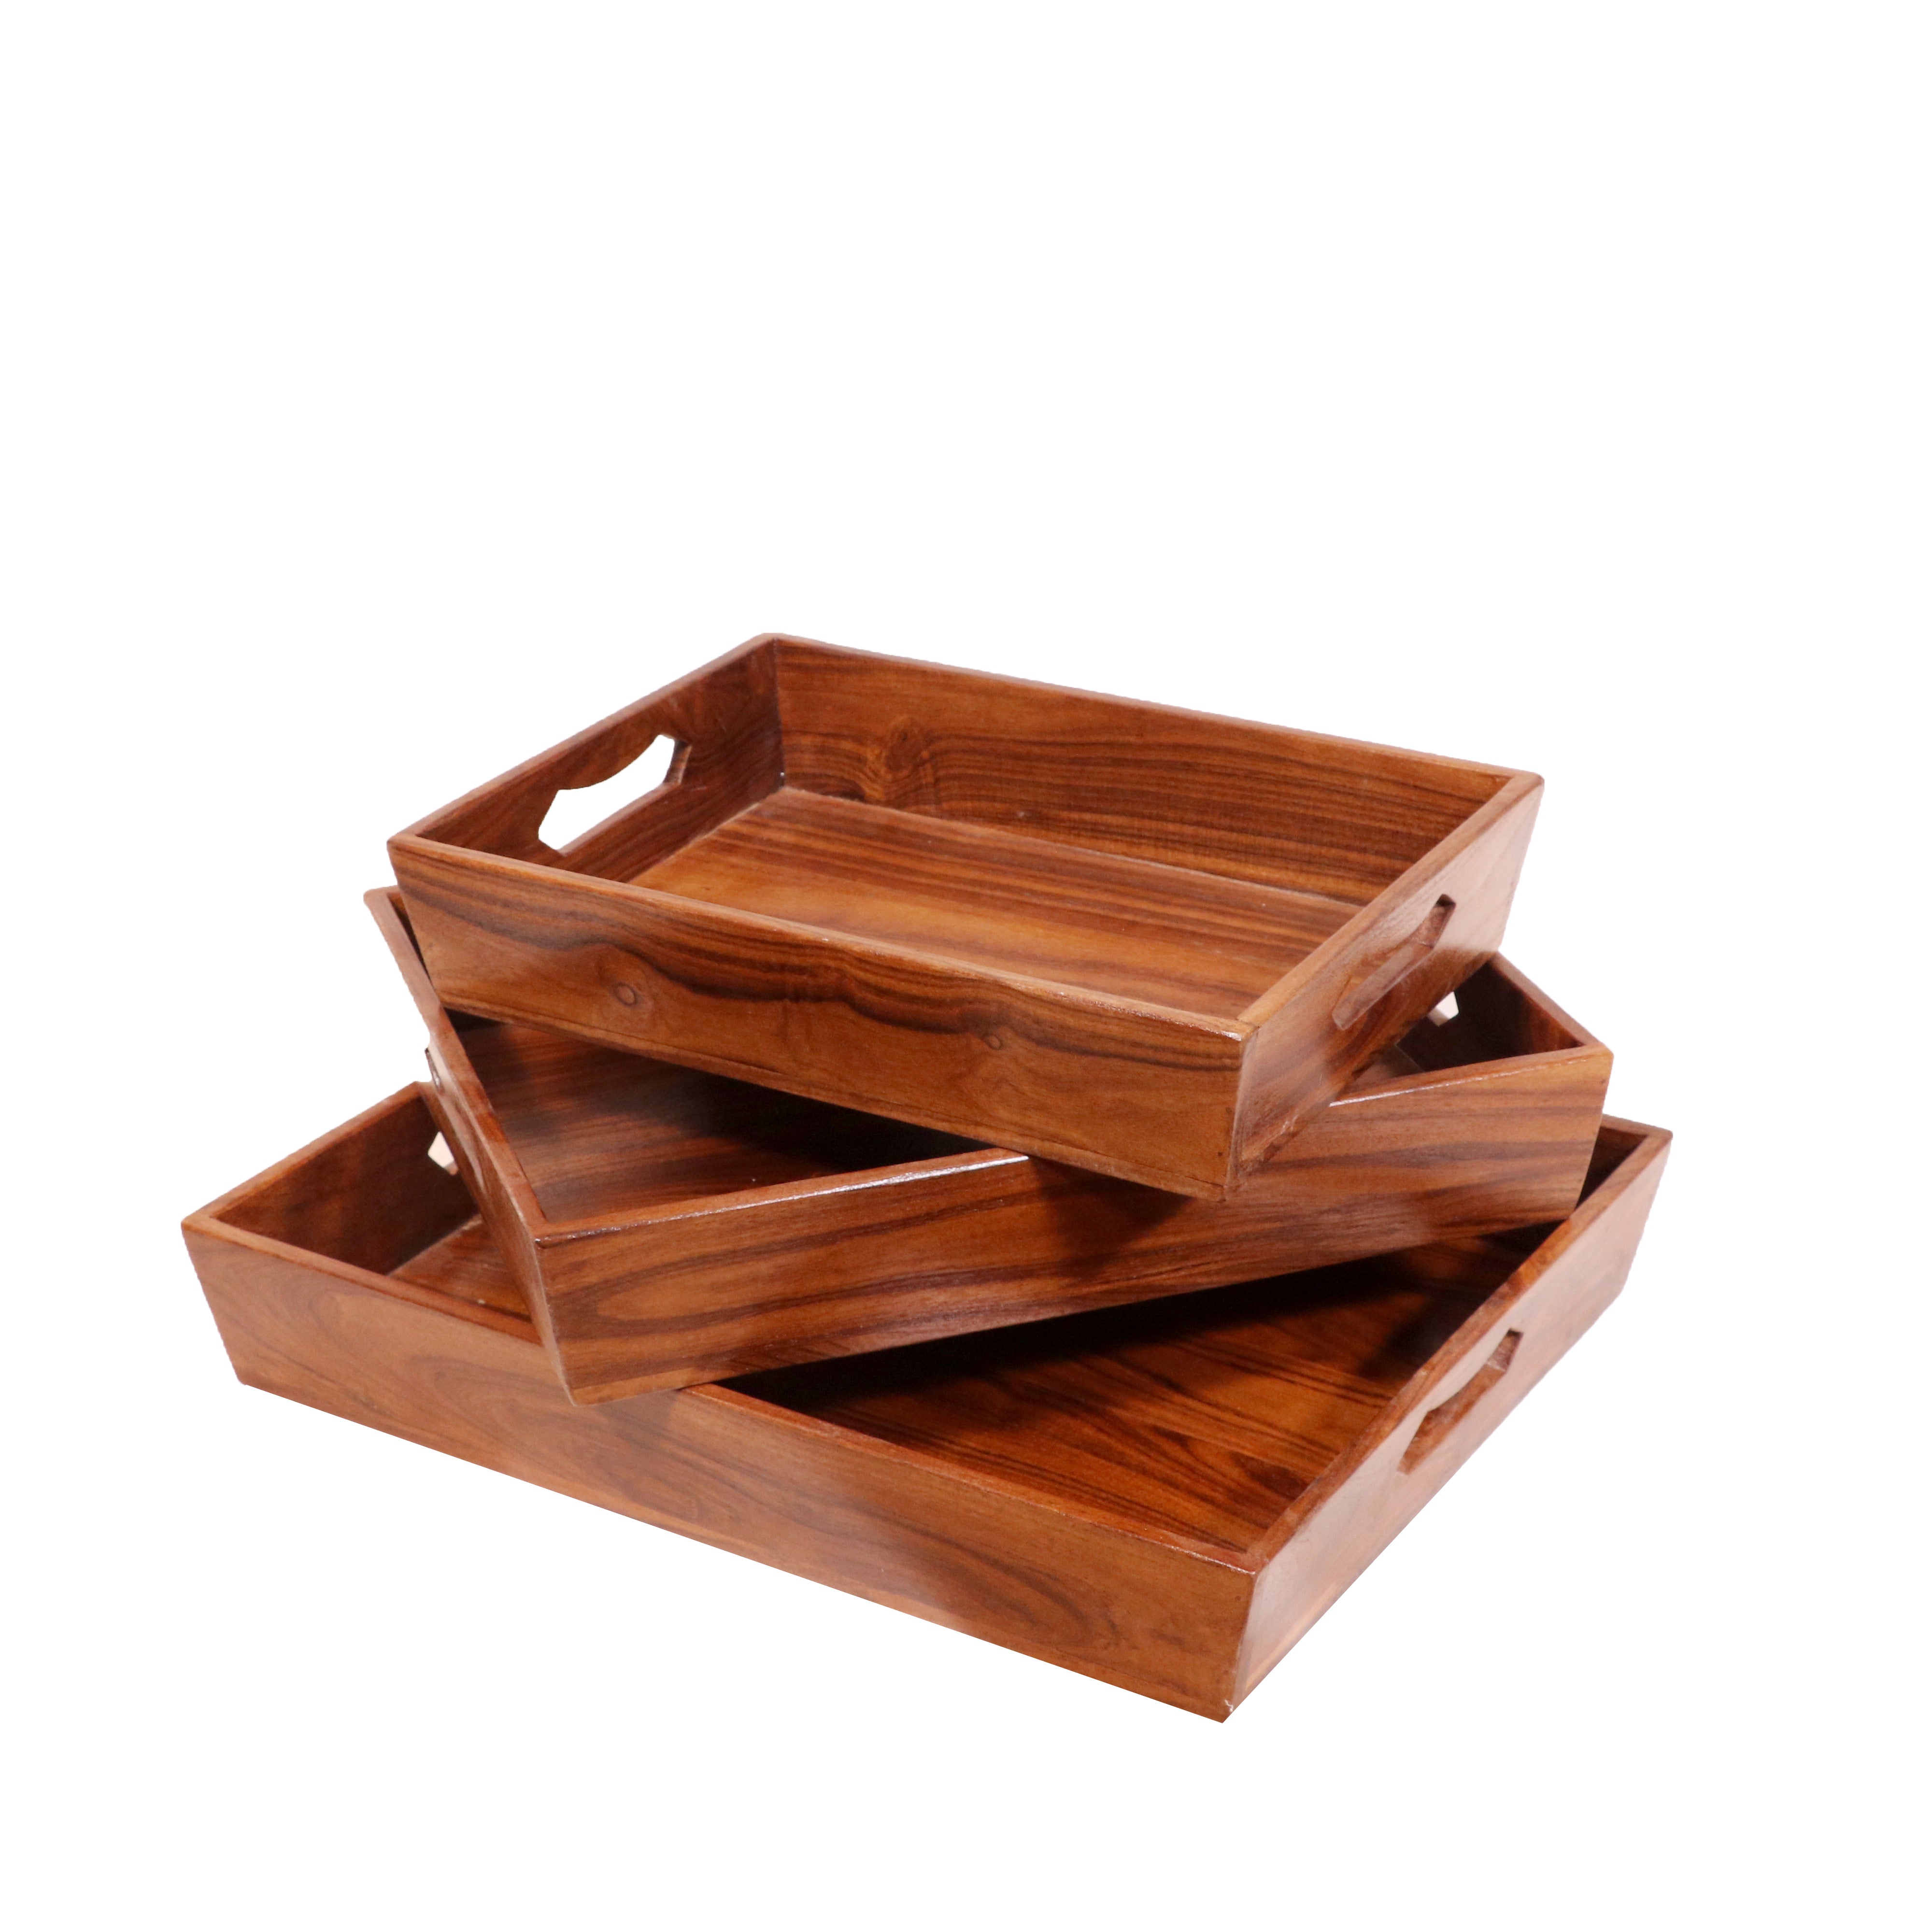 Glorious Natural Finish Wooden Handmade Tray - Set of 3 Tray